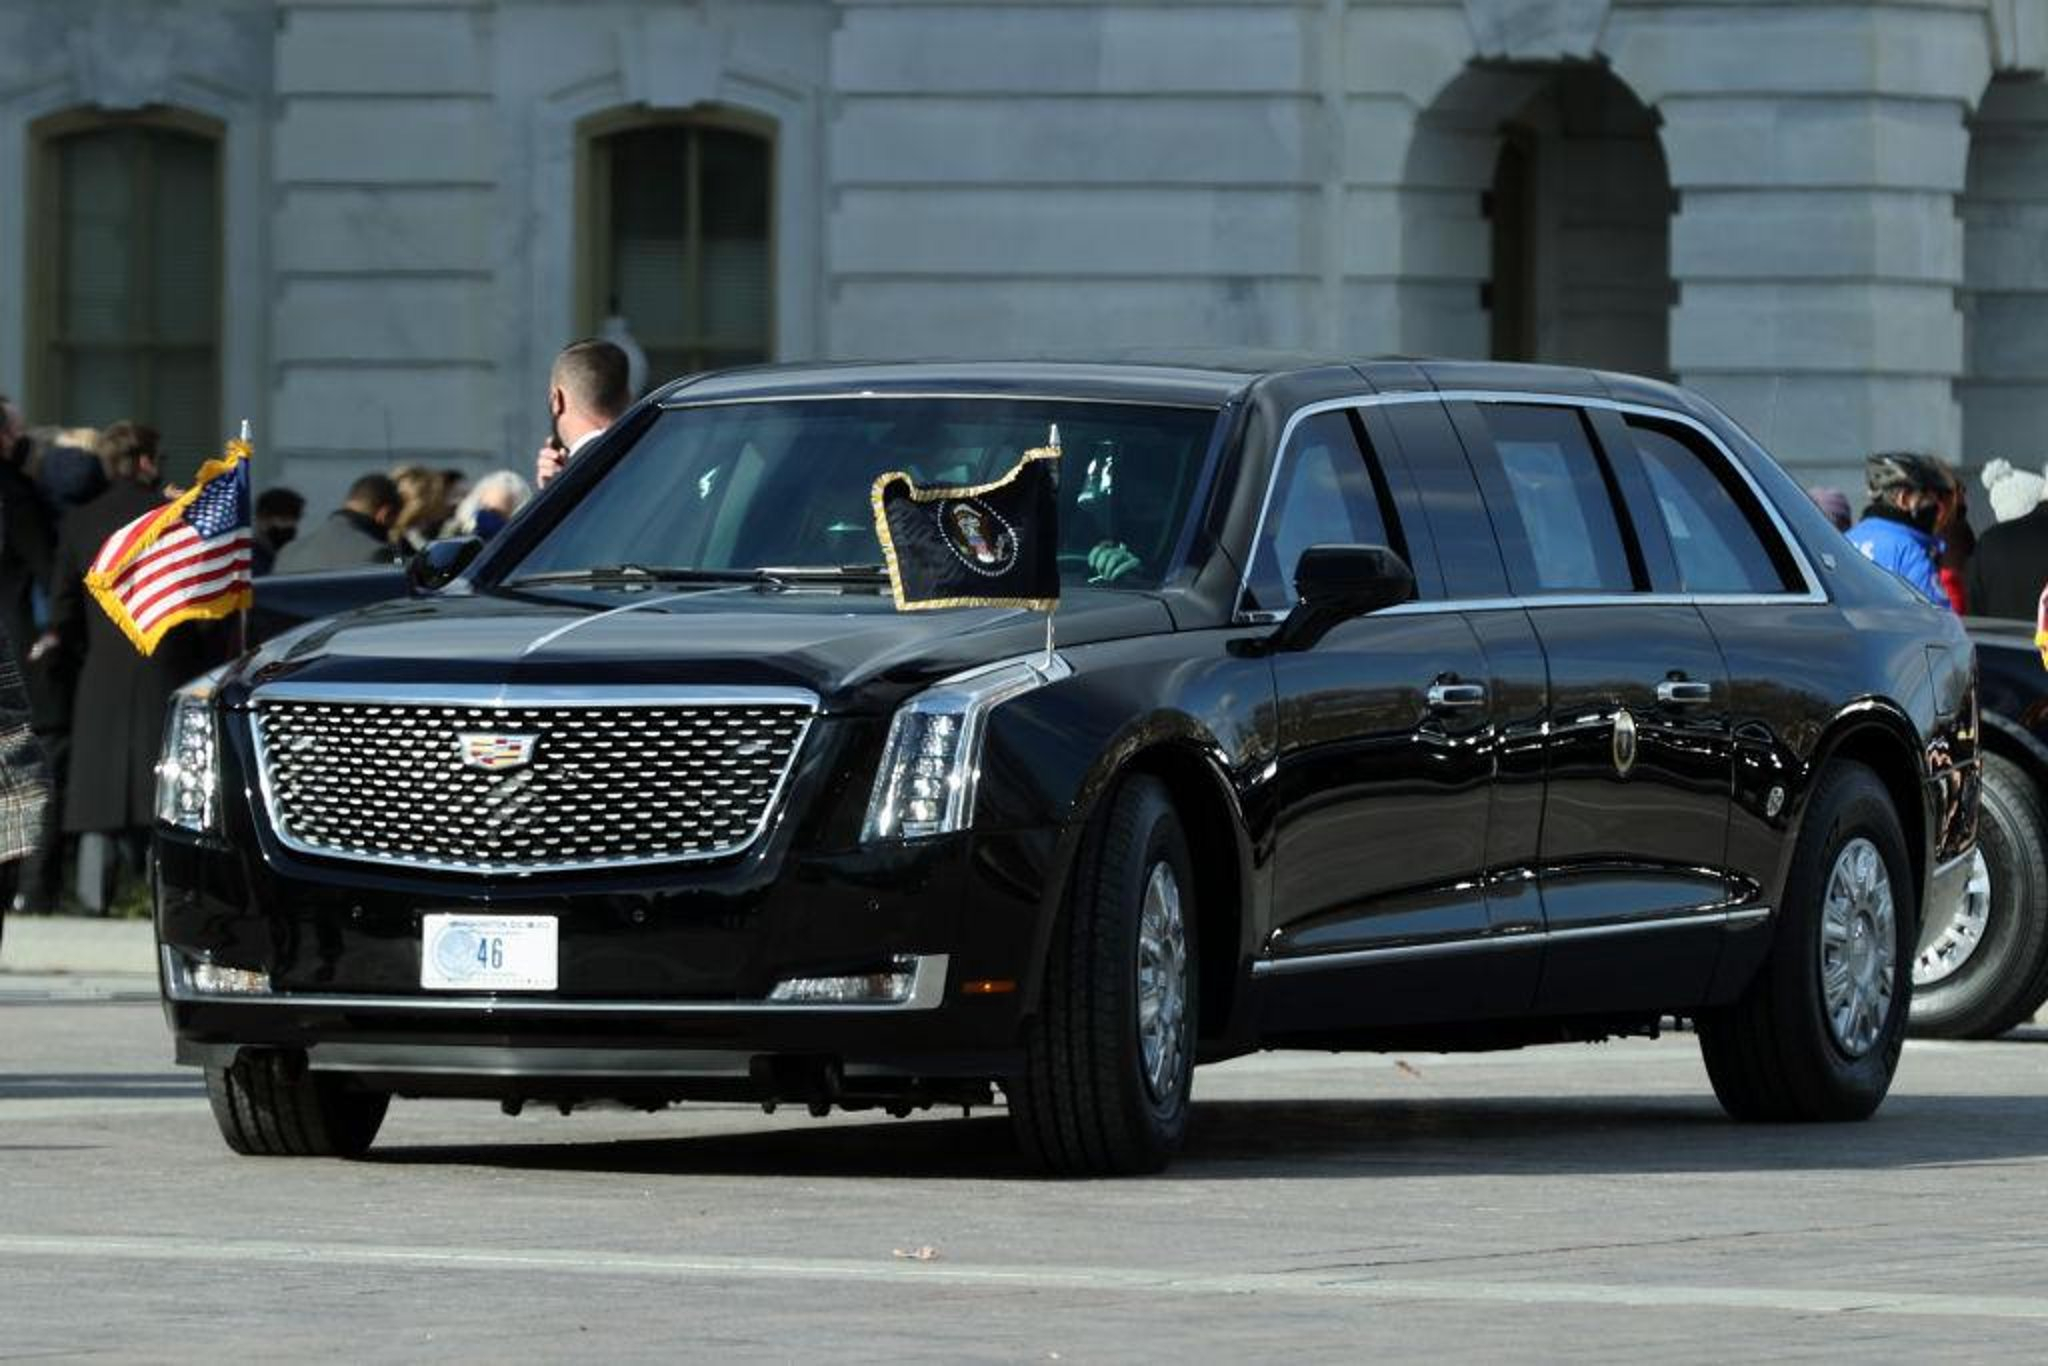 Президентский автомобиль. Лимузин Кадиллак Байдена. Лимузин Джо Байдена. Cadillac президента США 2022. Машина президента США Байдена.